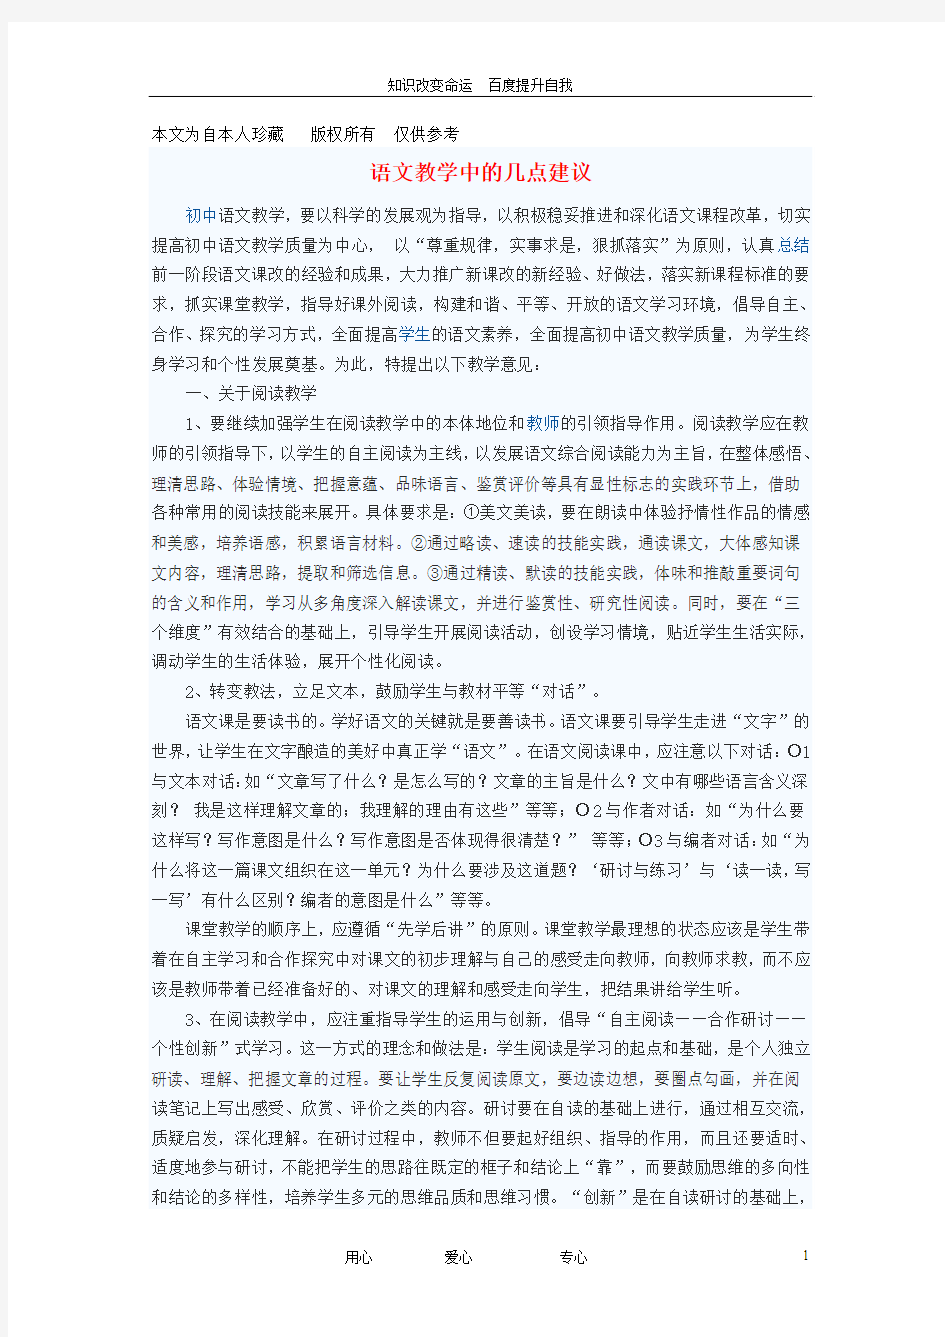 (no.1)初中语文教学论文 语文教学中的几点建议